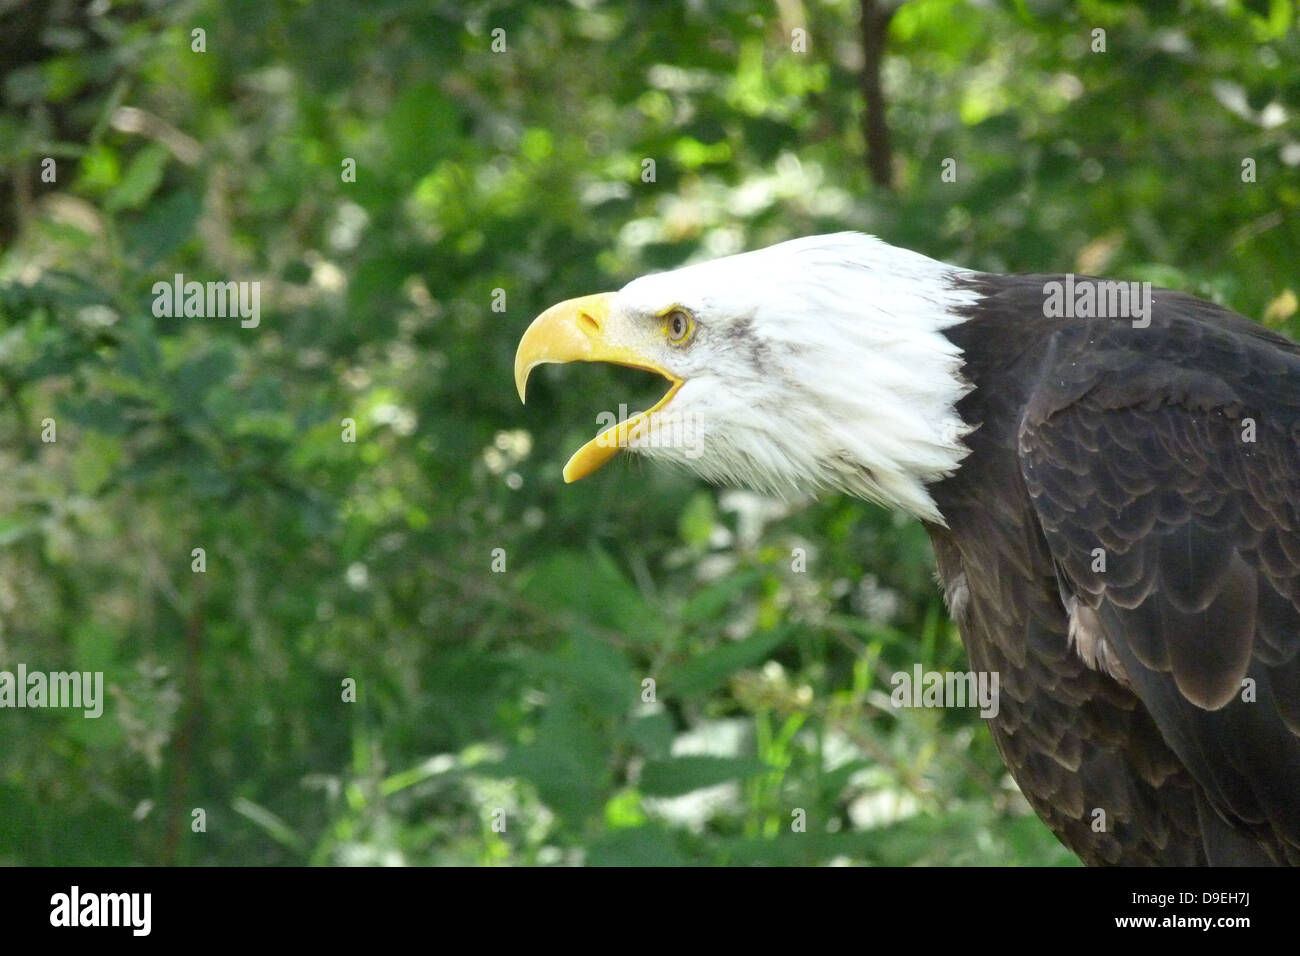 Adler raptor águila calva ave de rapiña ave Foto de stock